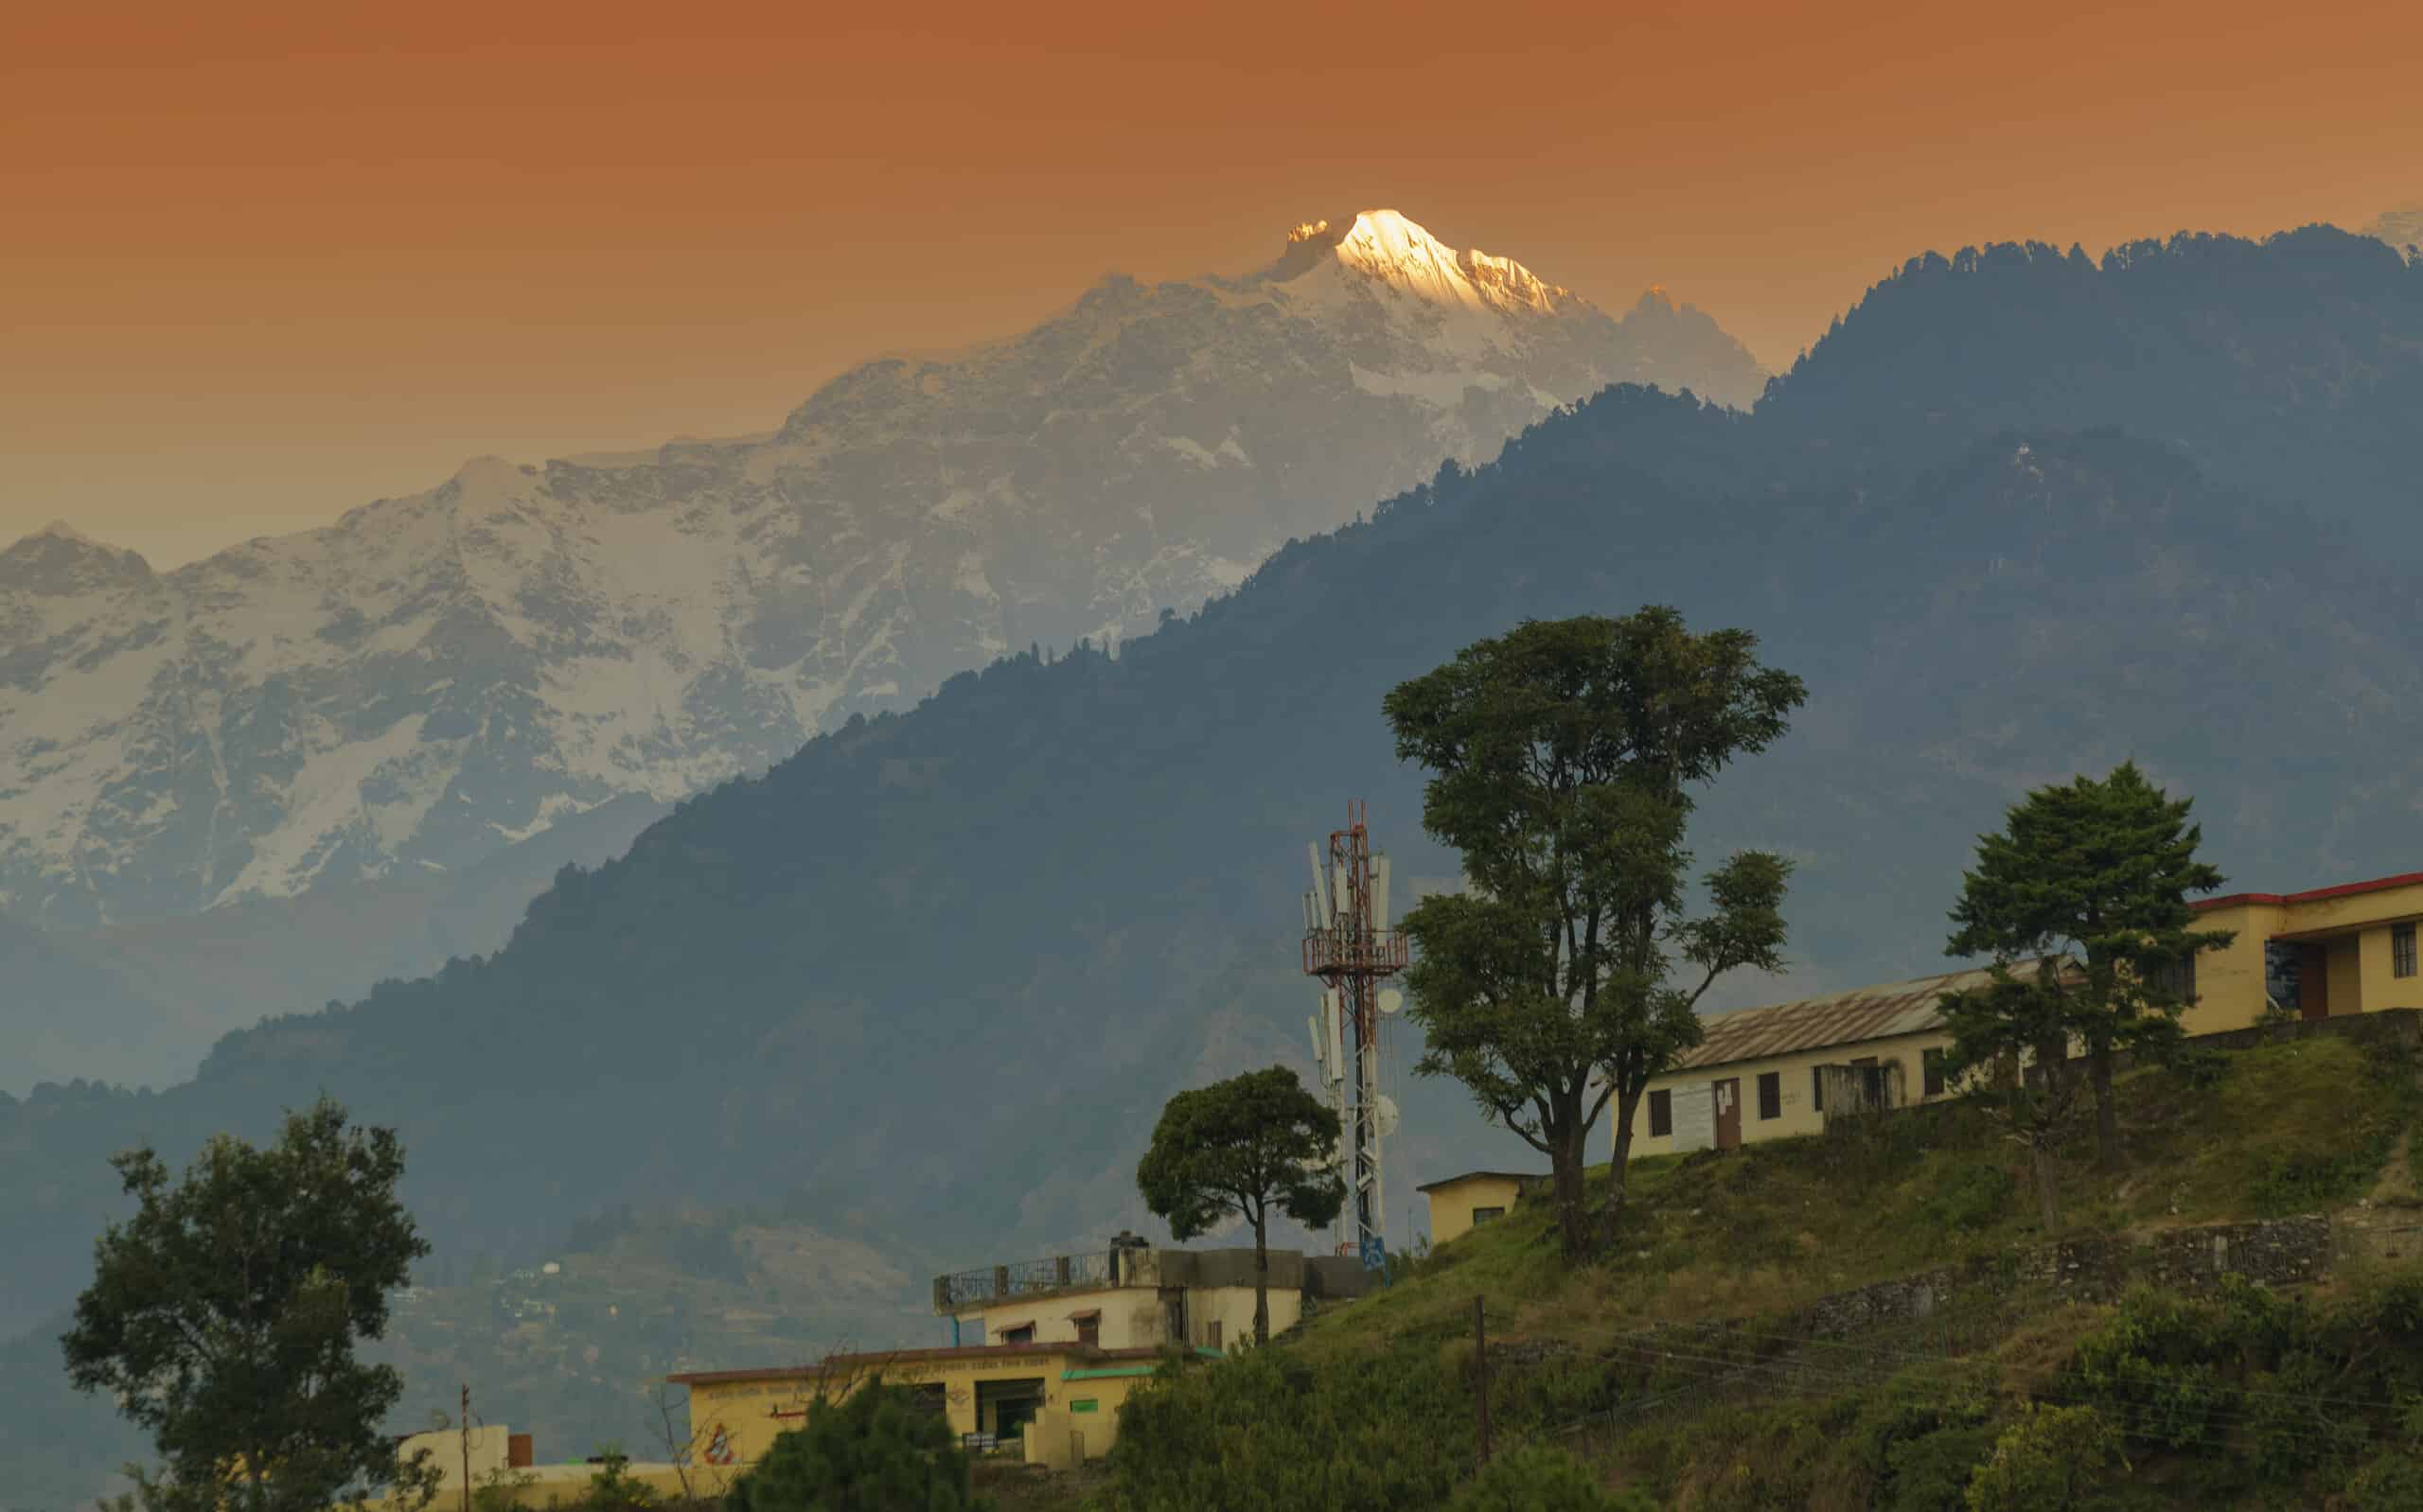 Snow capped mountain peak of Choukhamba range with tourist bungalows and resorts at Deoriatal, Uttarakhand, India. Sun set light on peak of famous Garhwal Himalayan mountain range.